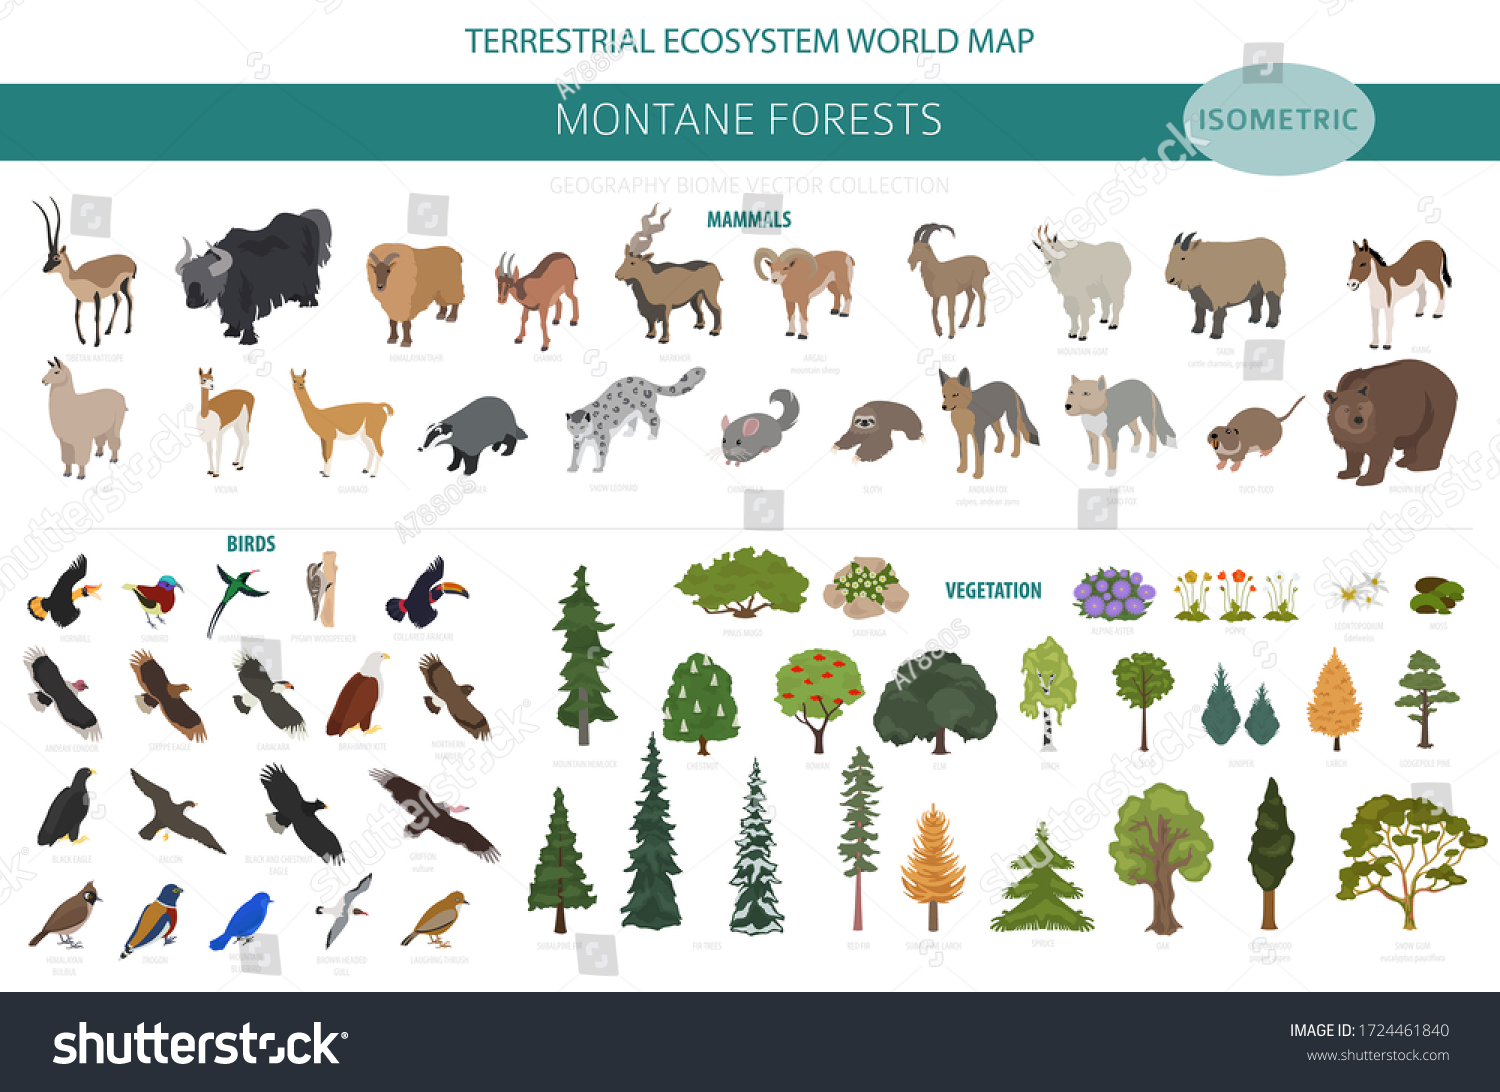 SVG of Montane forest biome, natural region infographic. Isometric version. Terrestrial ecosystem world map. Animals, birds and vegetations ecosystem design set. Vector illustration svg